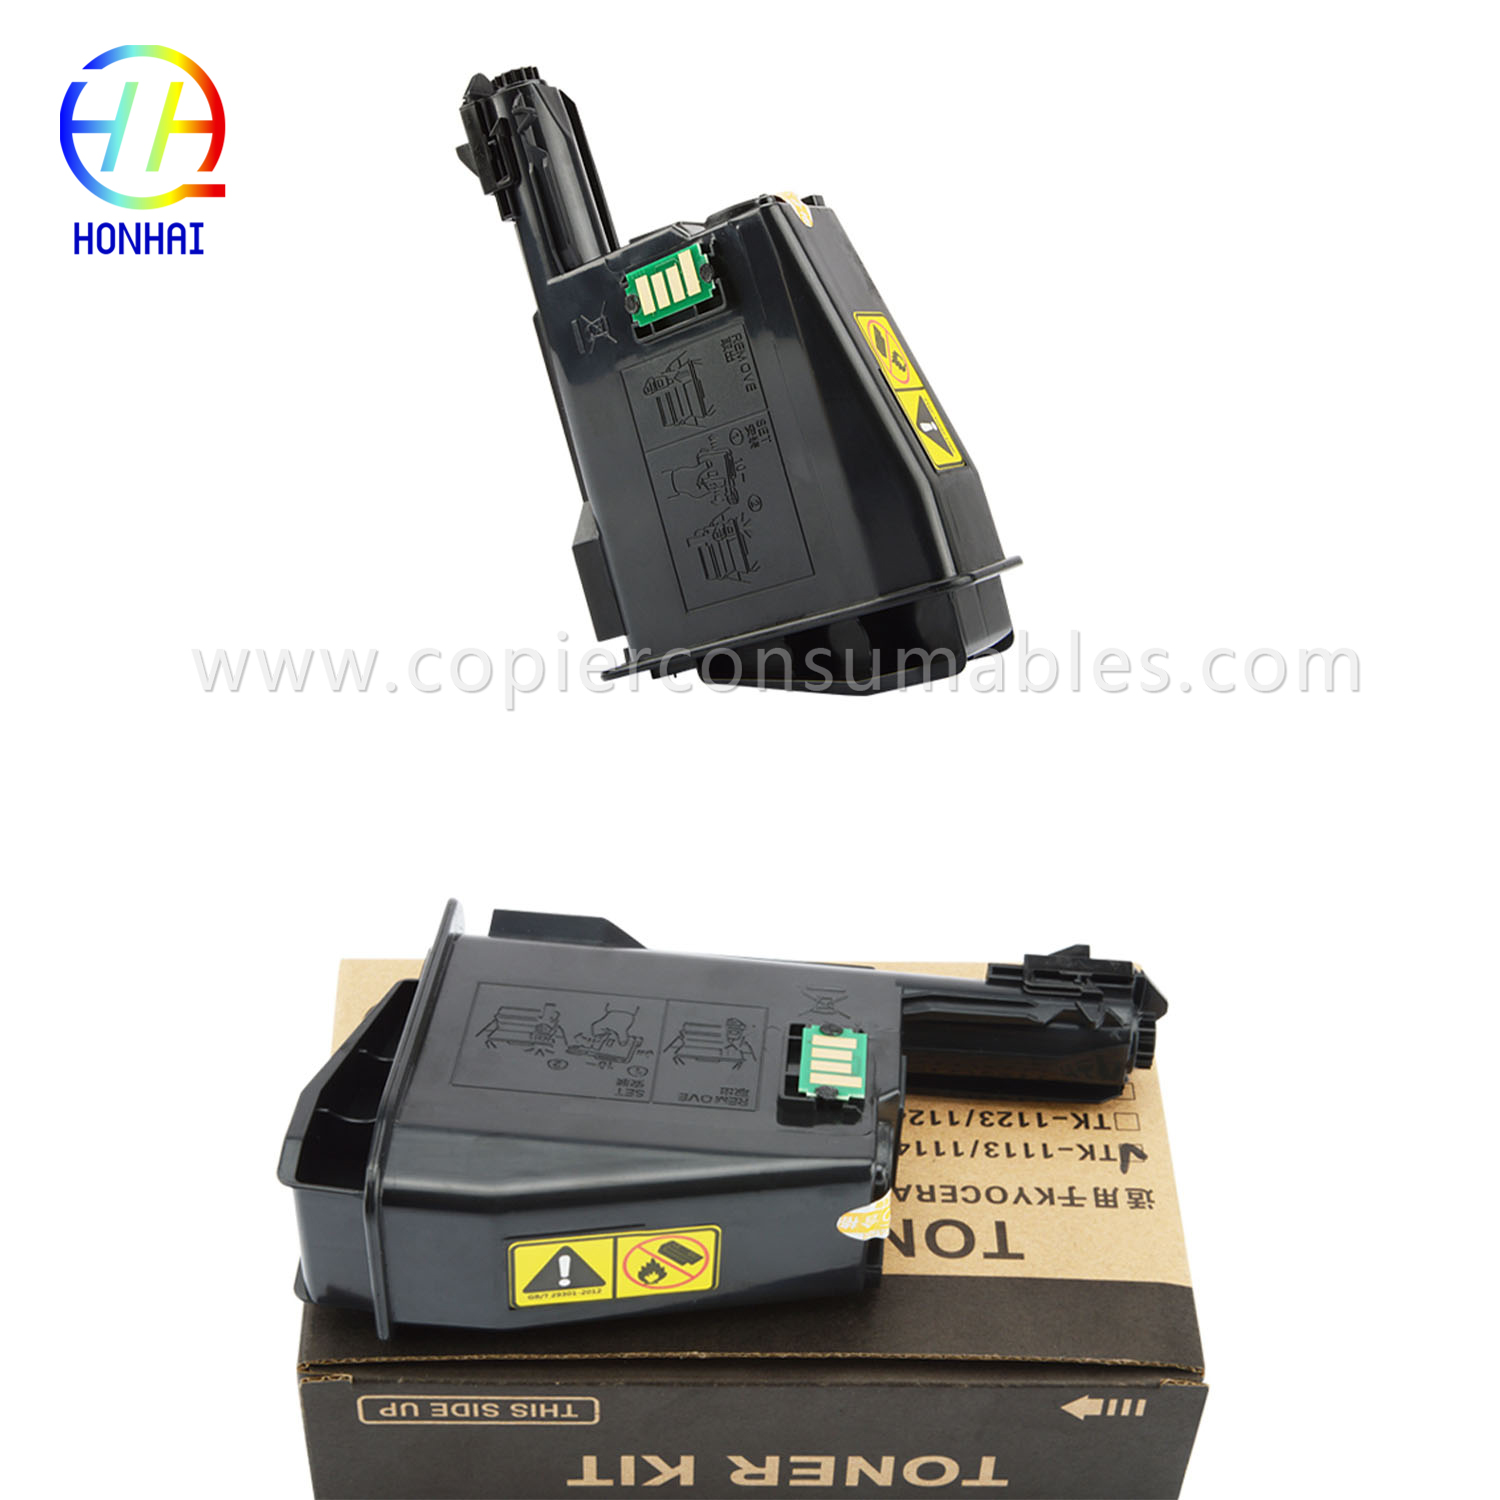 Toner Cartridge for Kyocera FS-1040 1020MFP 1120MFP ECOSYS M1520h 拷贝